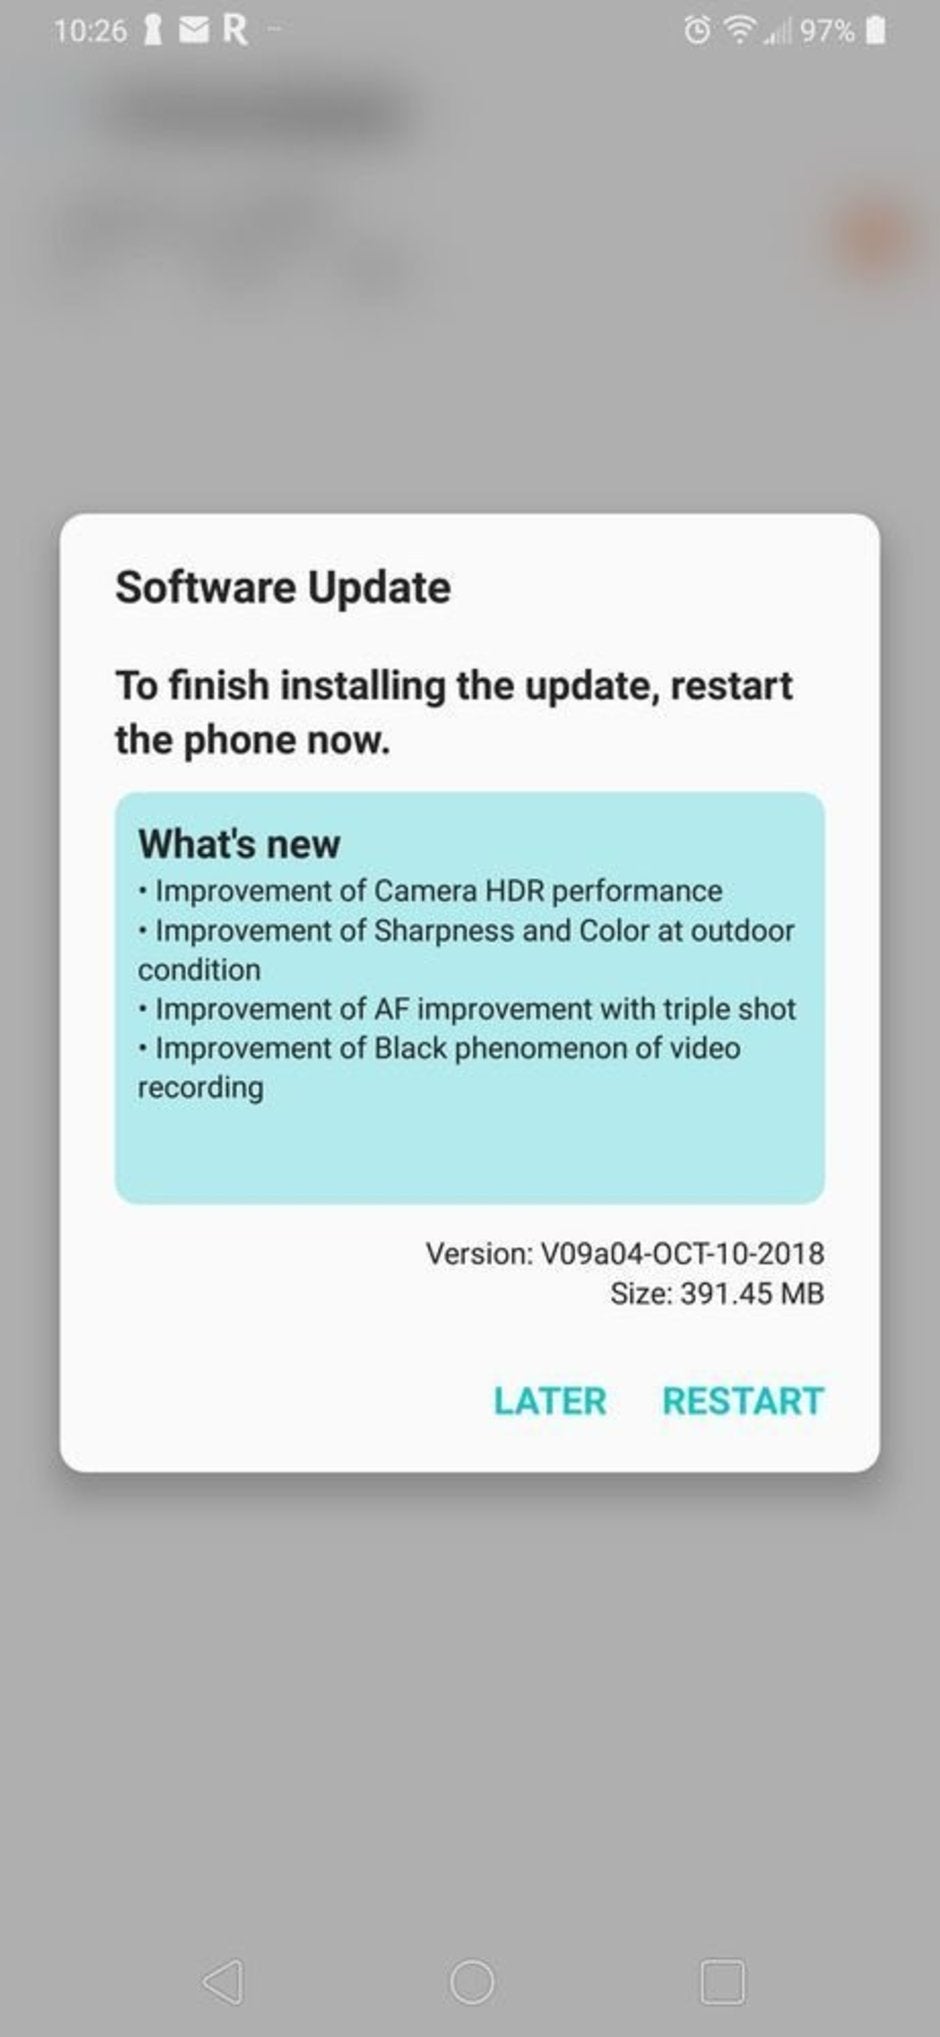 LG V40 update brings more camera improvements ahead of market release